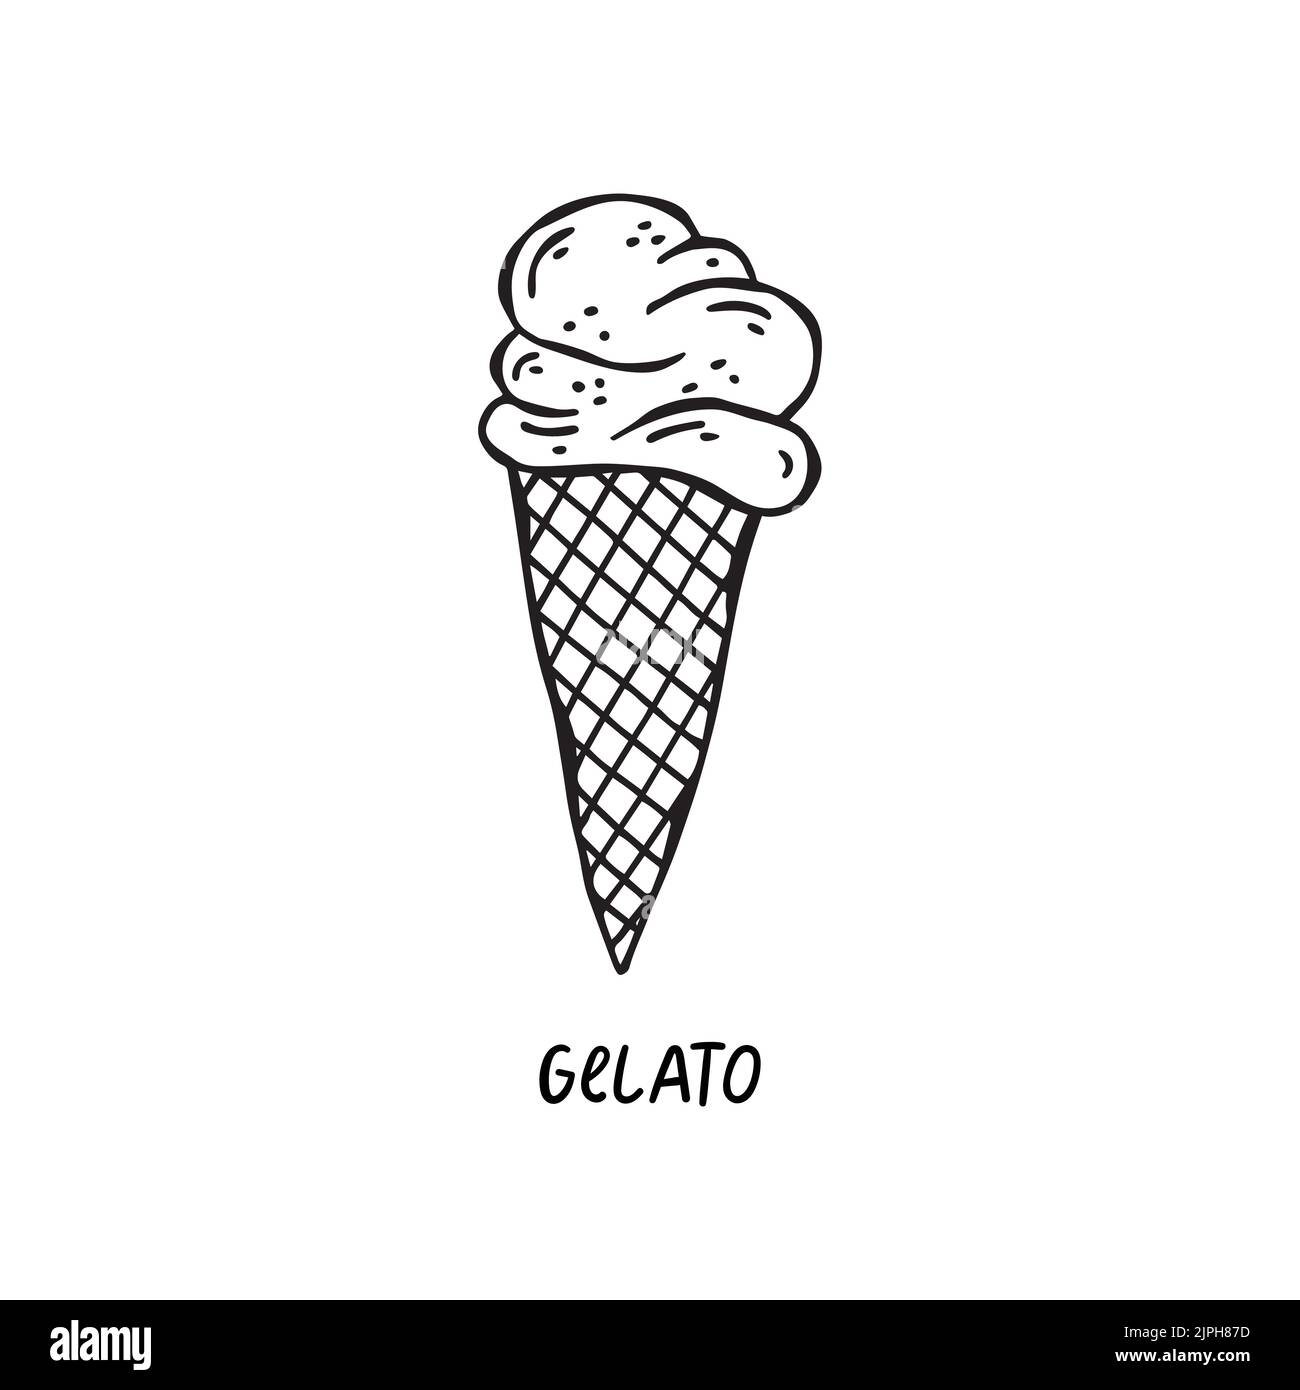 Vector hand-drawn illustration of Italian cuisine. Gelato Stock Vector